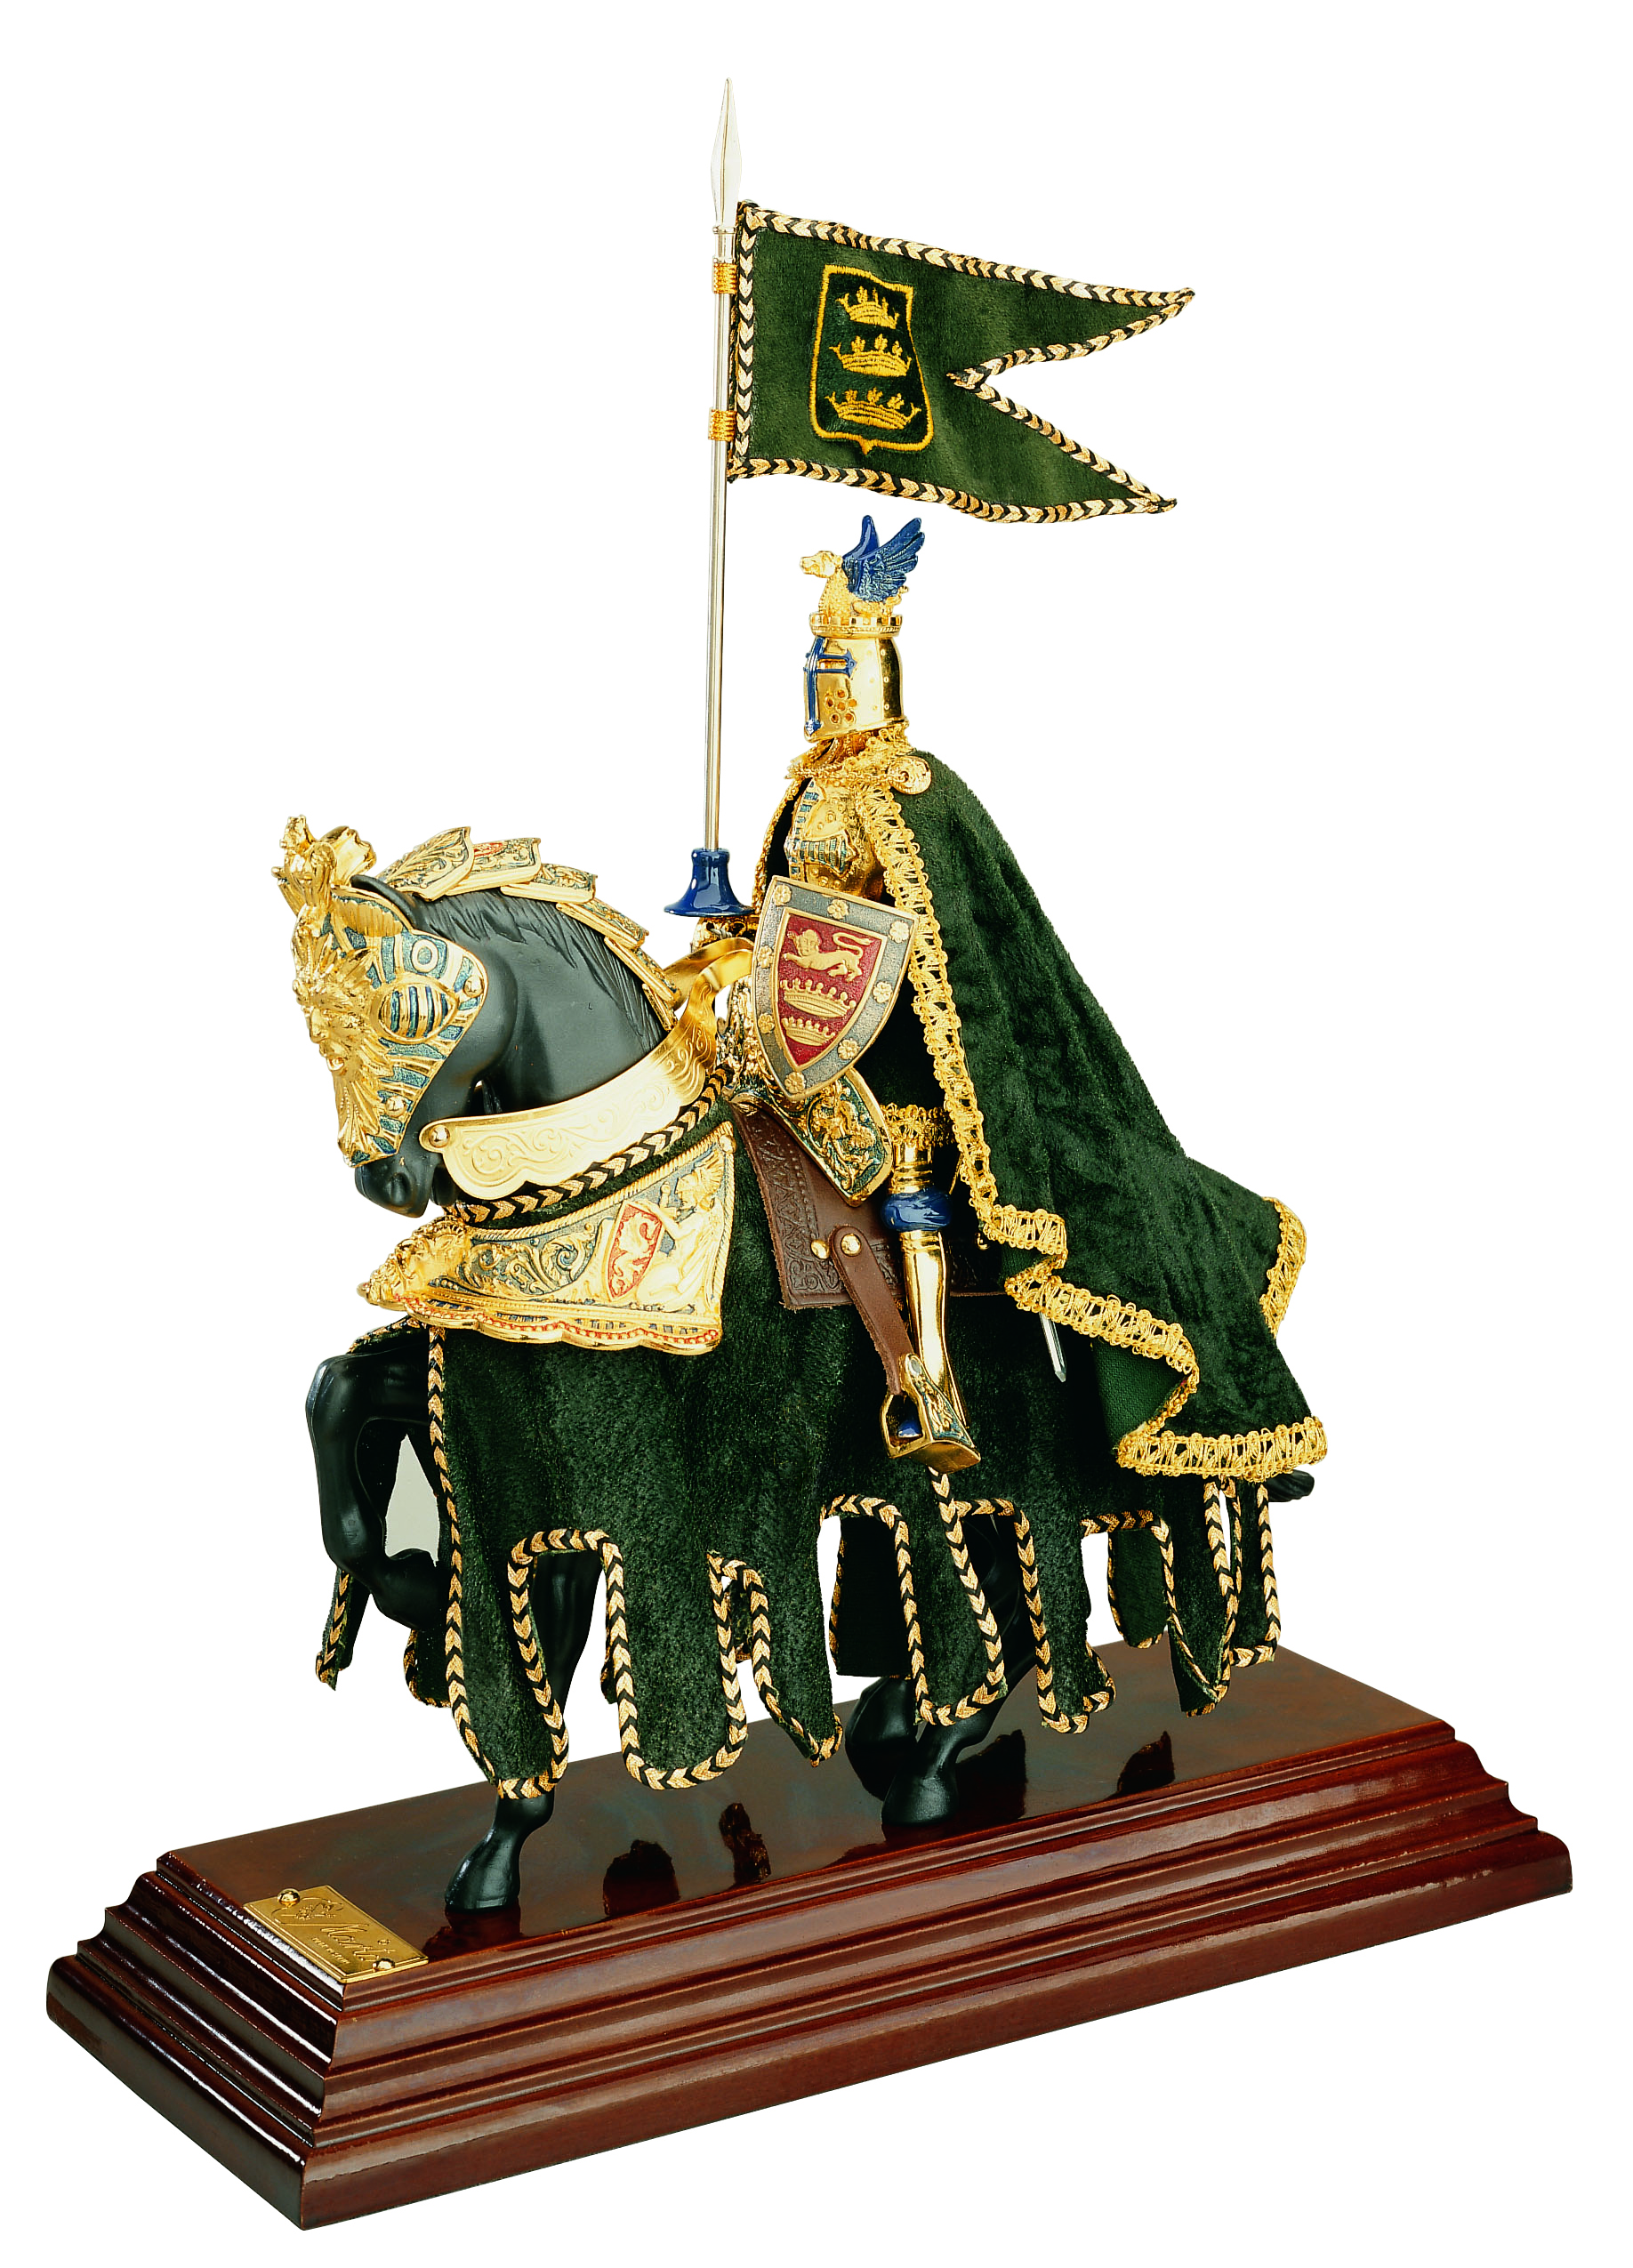 Miniatur Ritter König Arthur auf Pferd